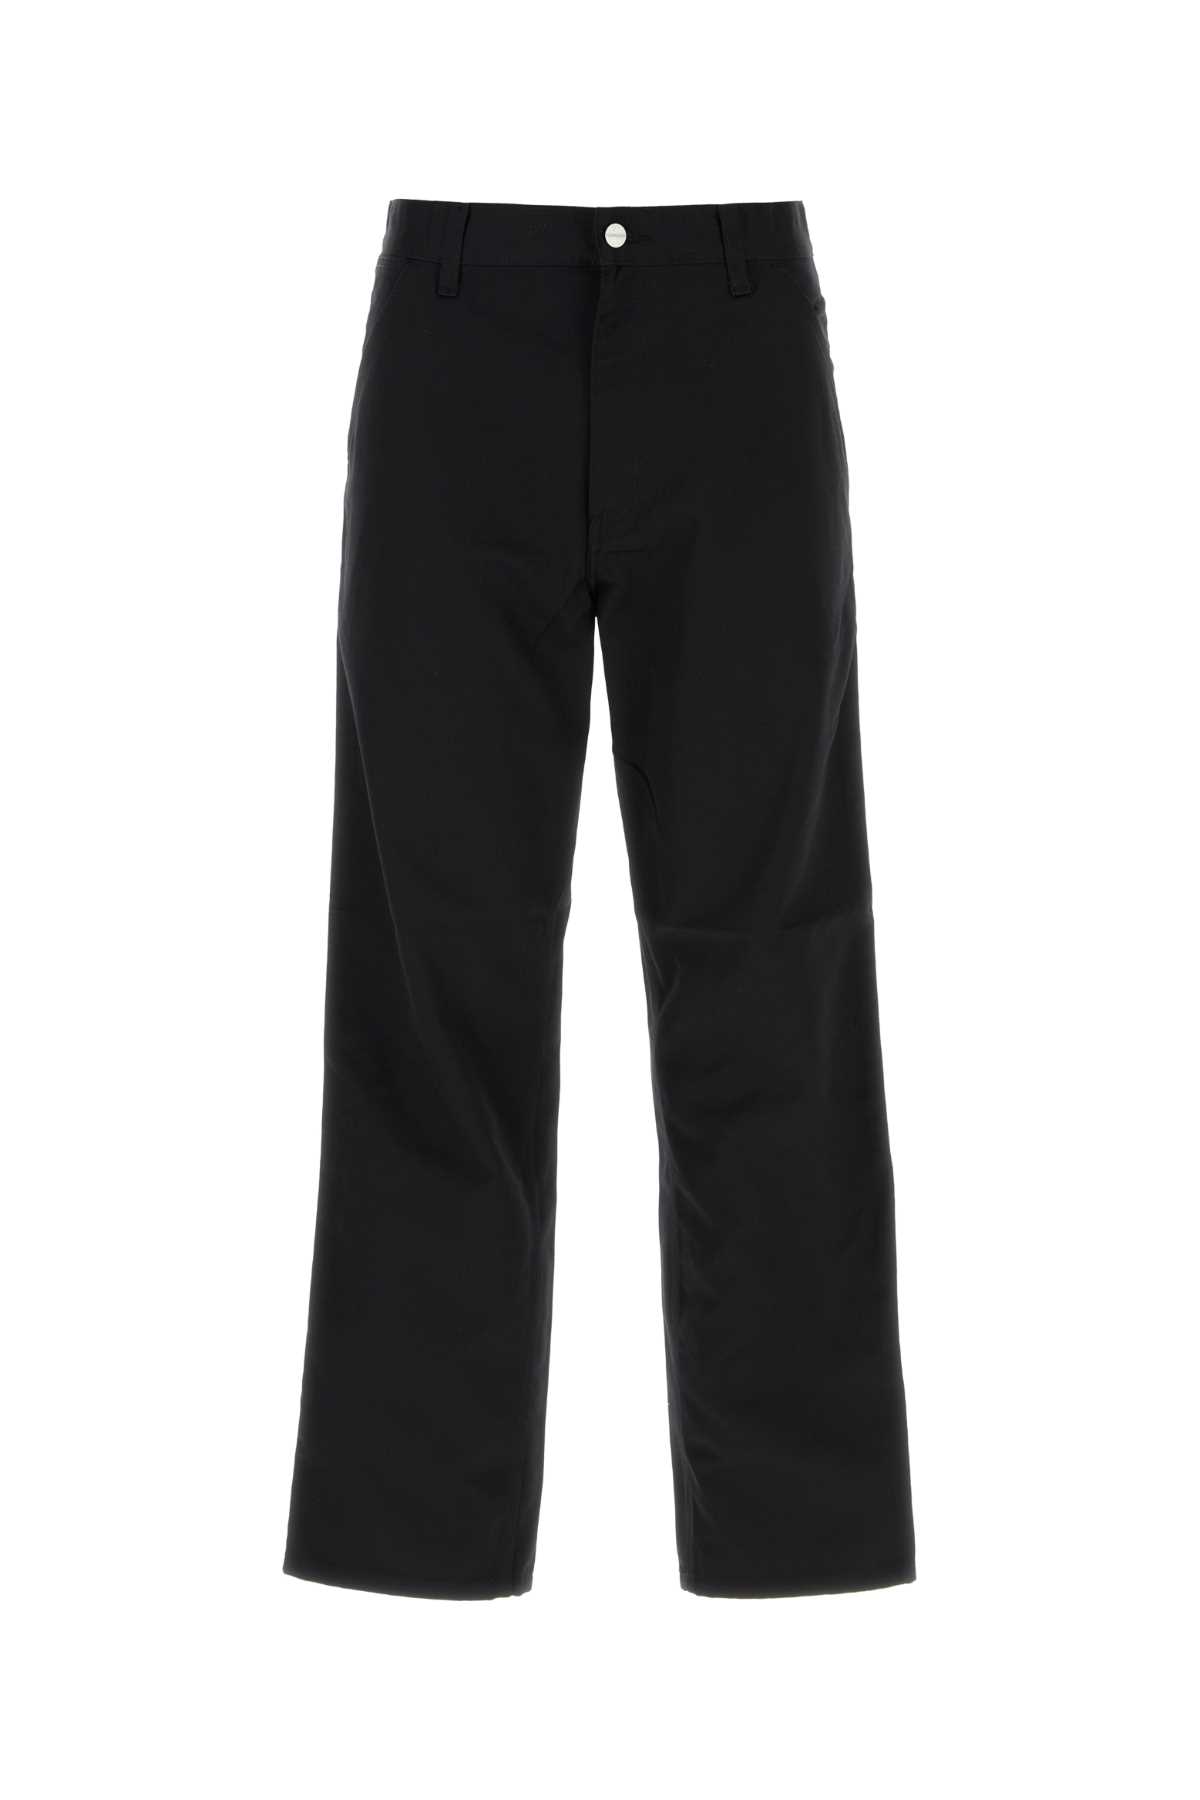 Carhartt Black Polyester Blend Simple Pant